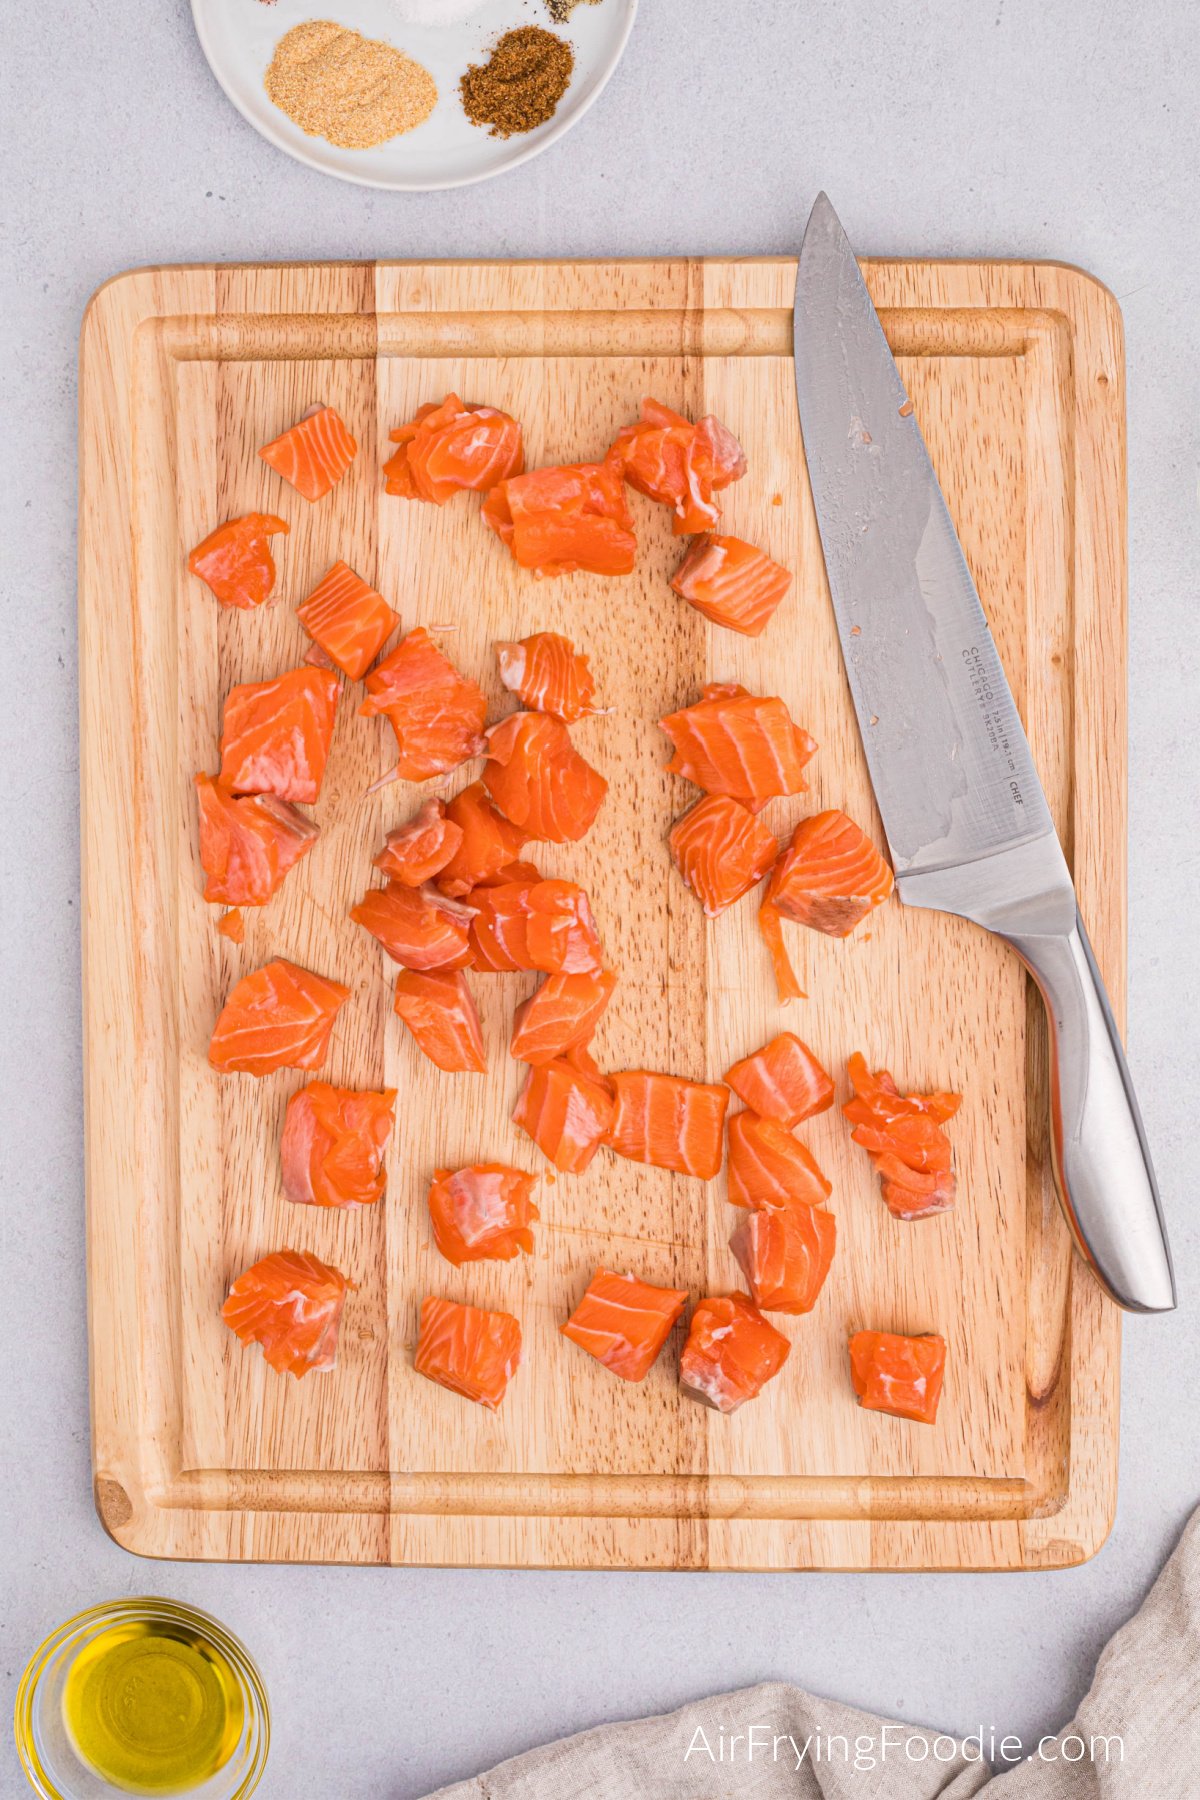 Salmon filets cut into bite sized pieces.